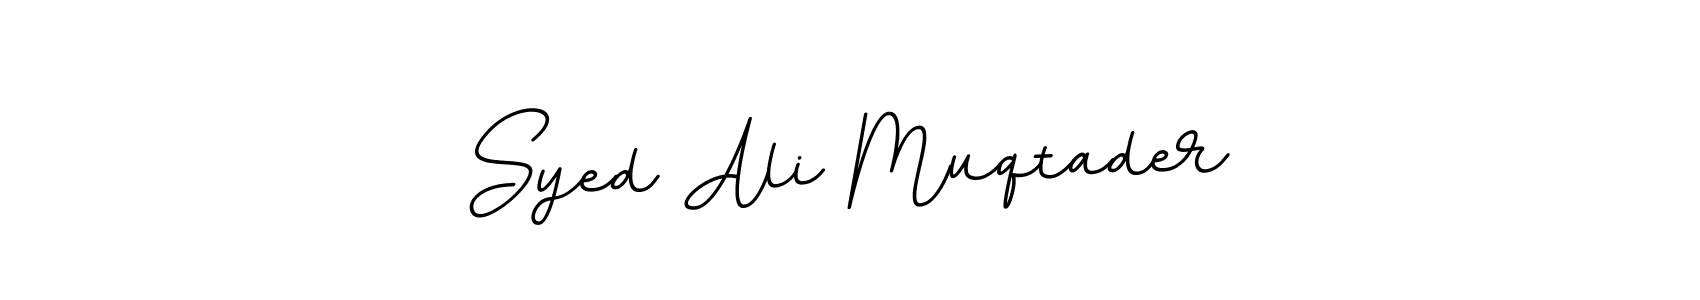 How to Draw Syed Ali Muqtader signature style? BallpointsItalic-DORy9 is a latest design signature styles for name Syed Ali Muqtader. Syed Ali Muqtader signature style 11 images and pictures png